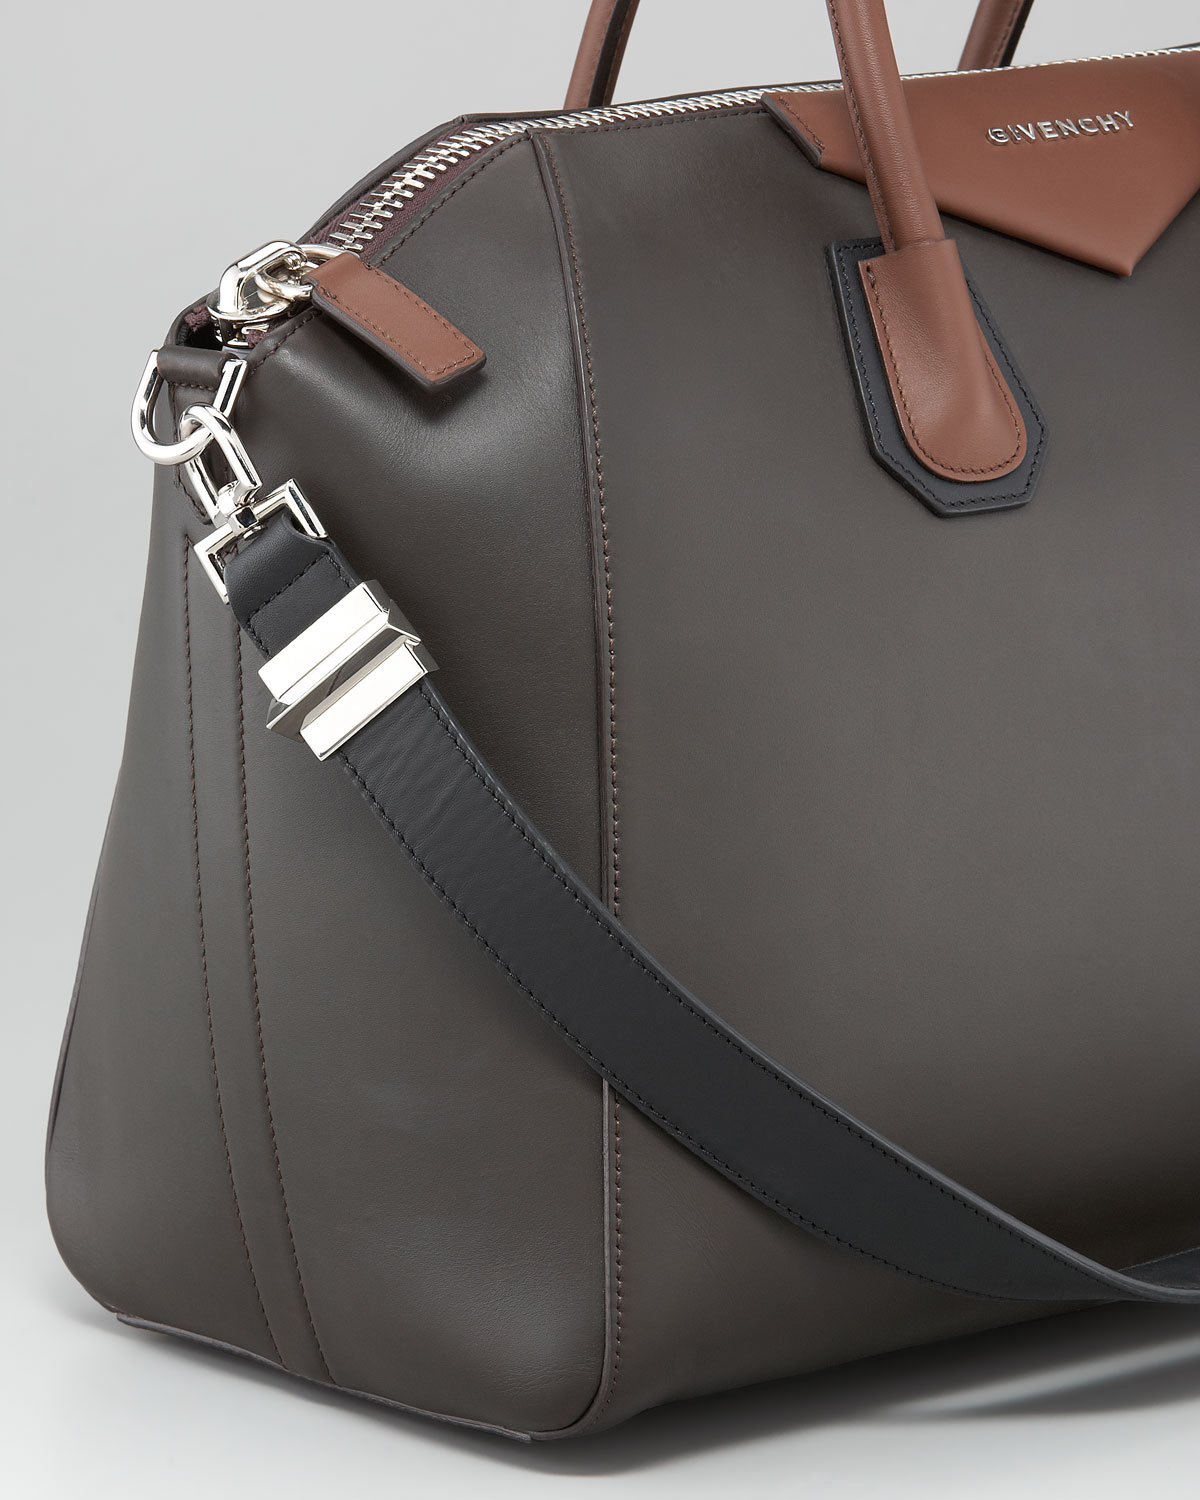 Givenchy Antigona Medium Tricolor Bag in Gray - Lyst